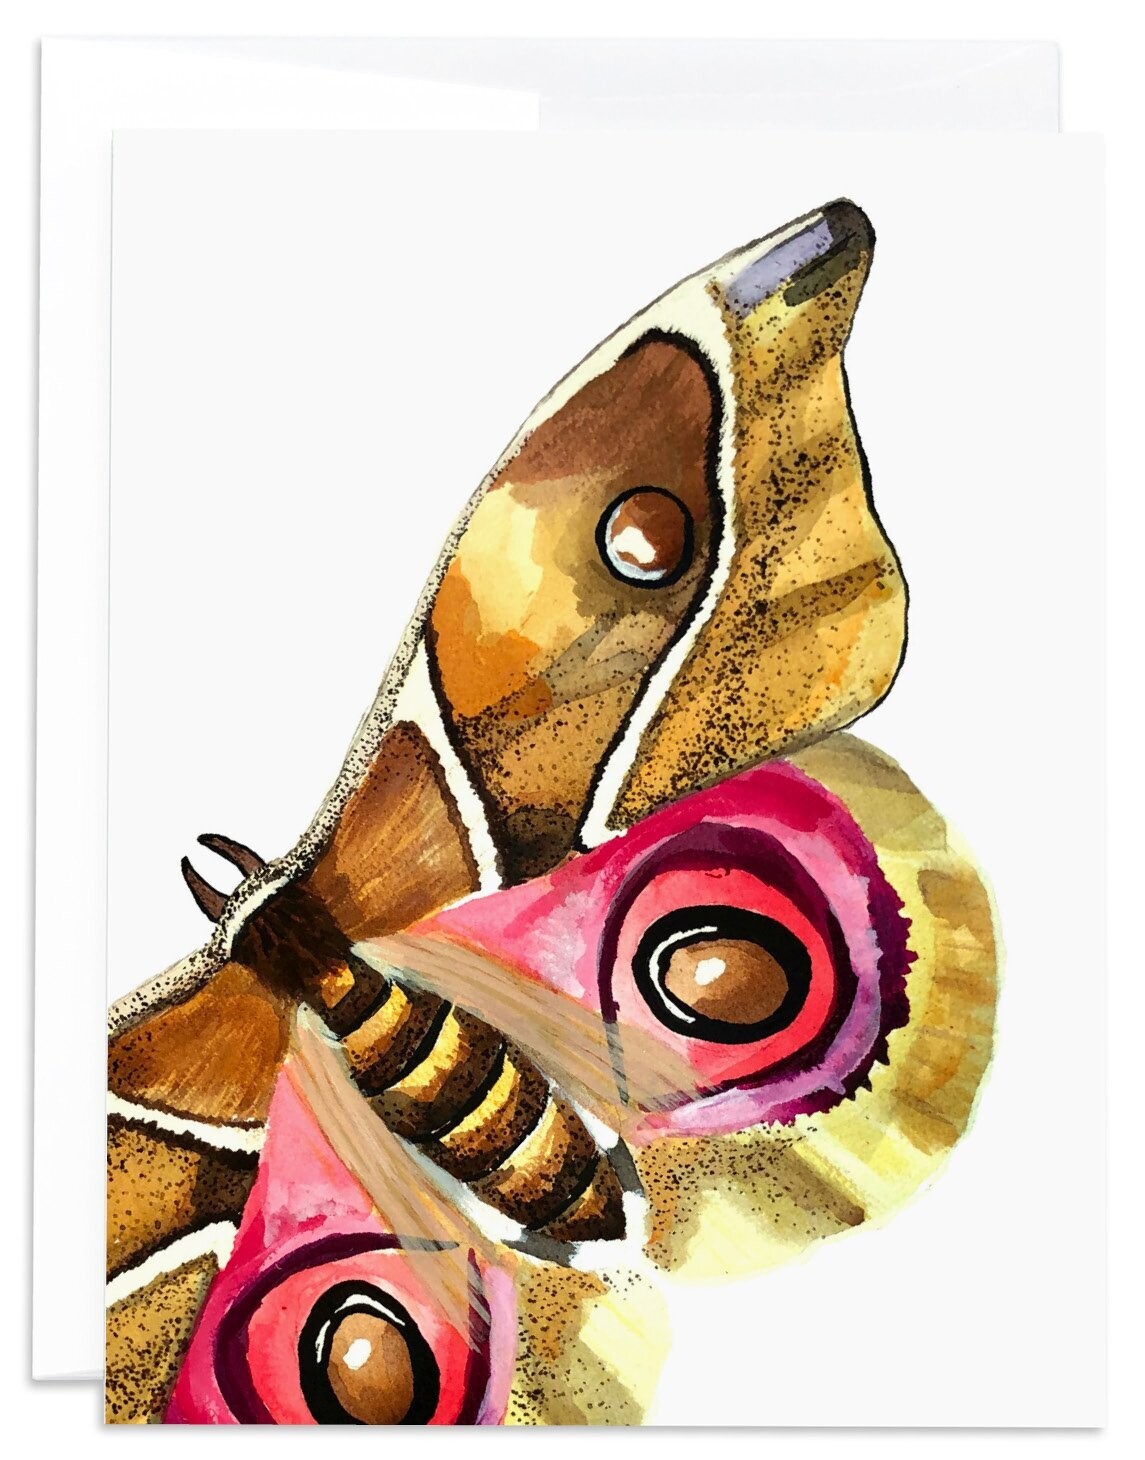 Moth #1 Notecard, Ochre/Pink (MO-NC-001)